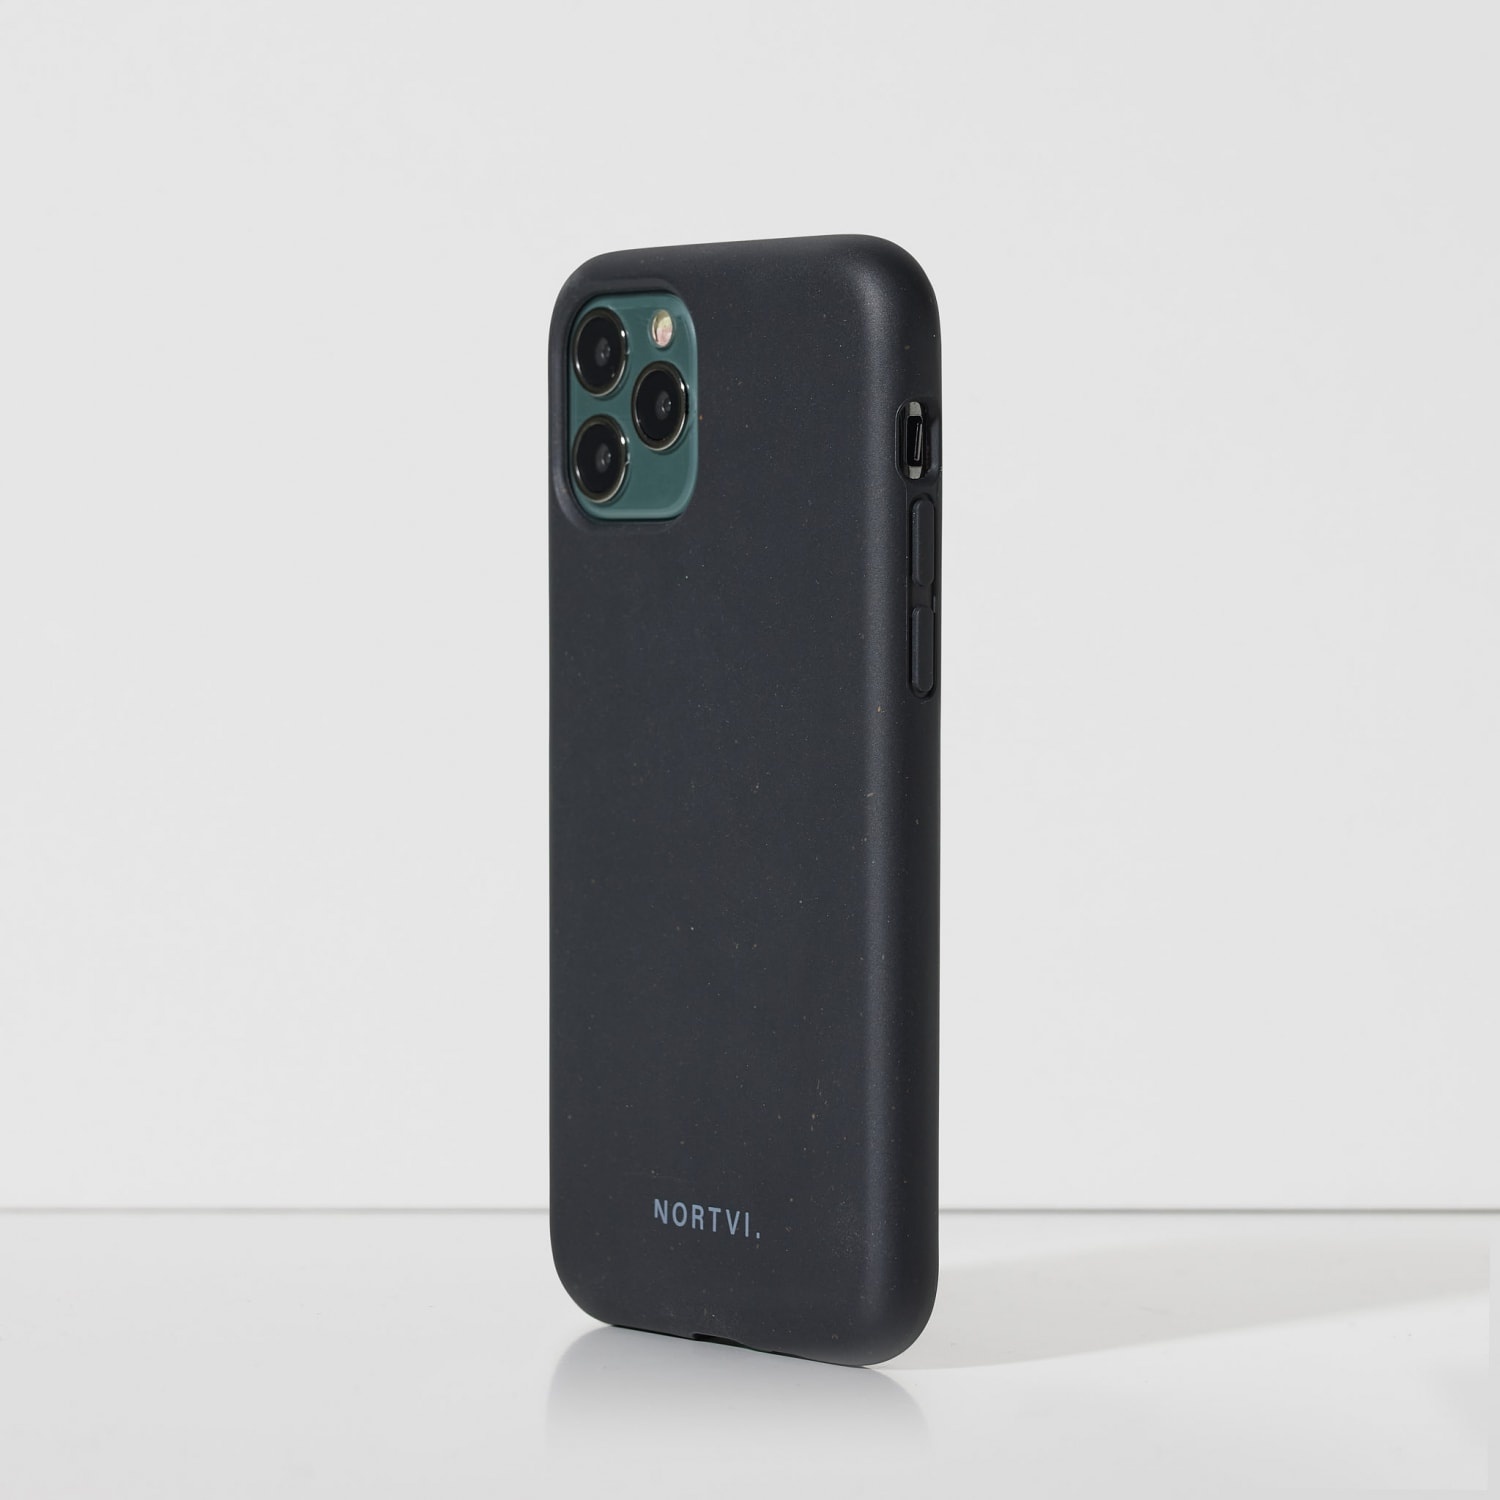 NORTVI black phone case for iPhone 11 Pro case